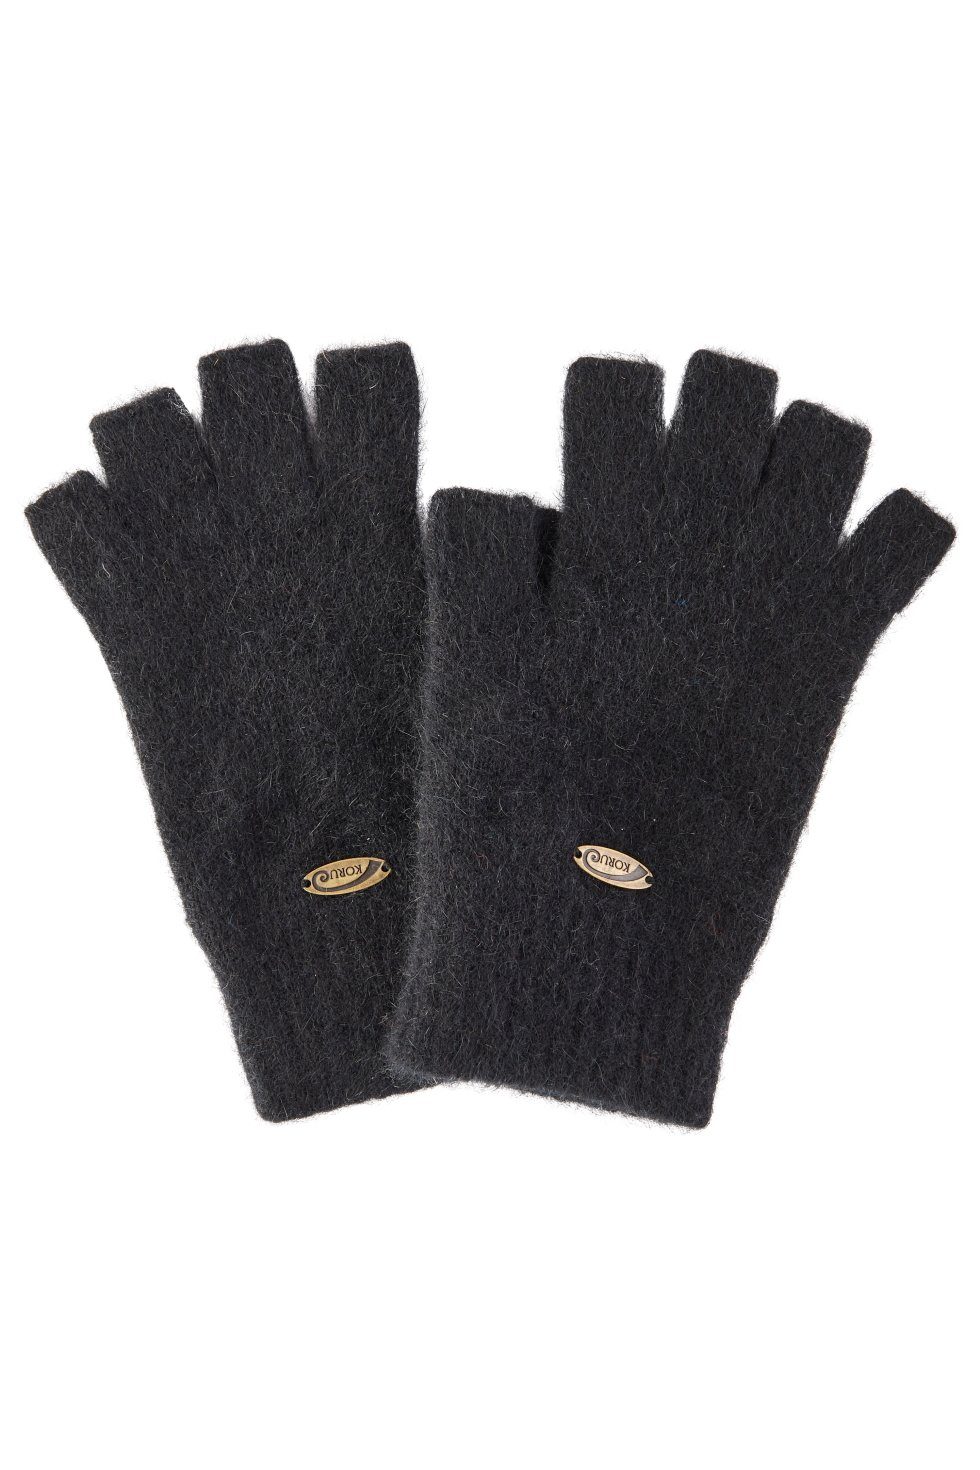 Koru Knitwear Strickhandschuhe Possum Merino Halbfinger Handschuhe aus der Possumhaarfaser atmungsaktiv